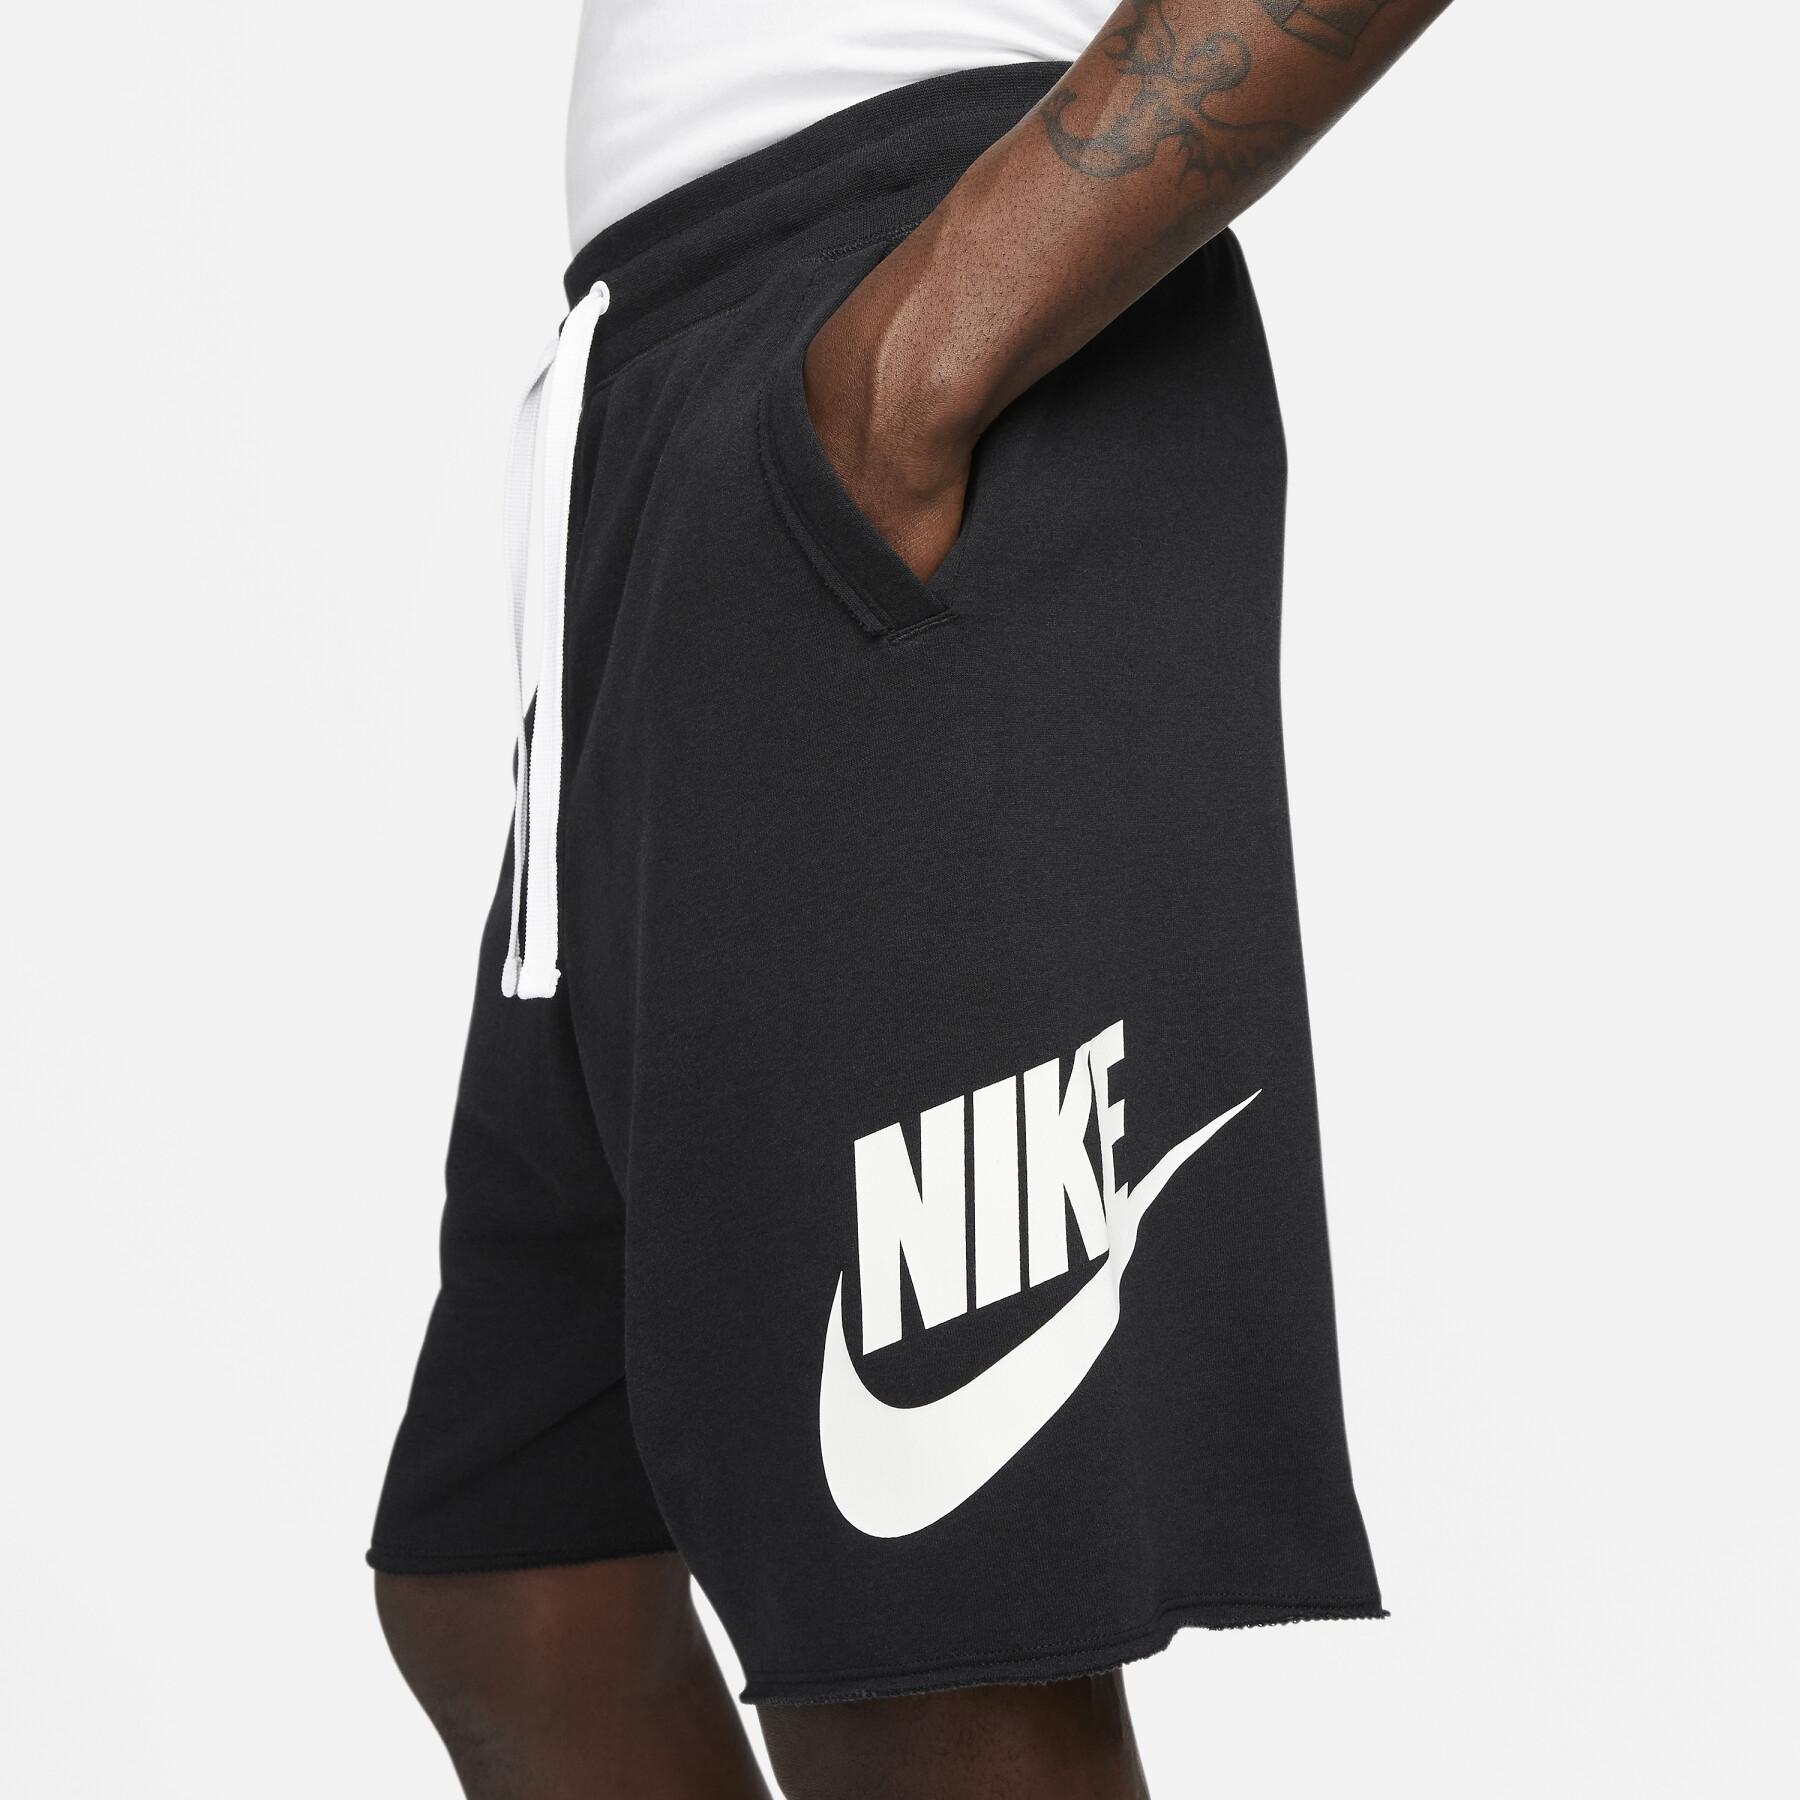 Nike - Shorts - Short French Lifestyle Club - Men\'s Terry clothing HBR Alumni